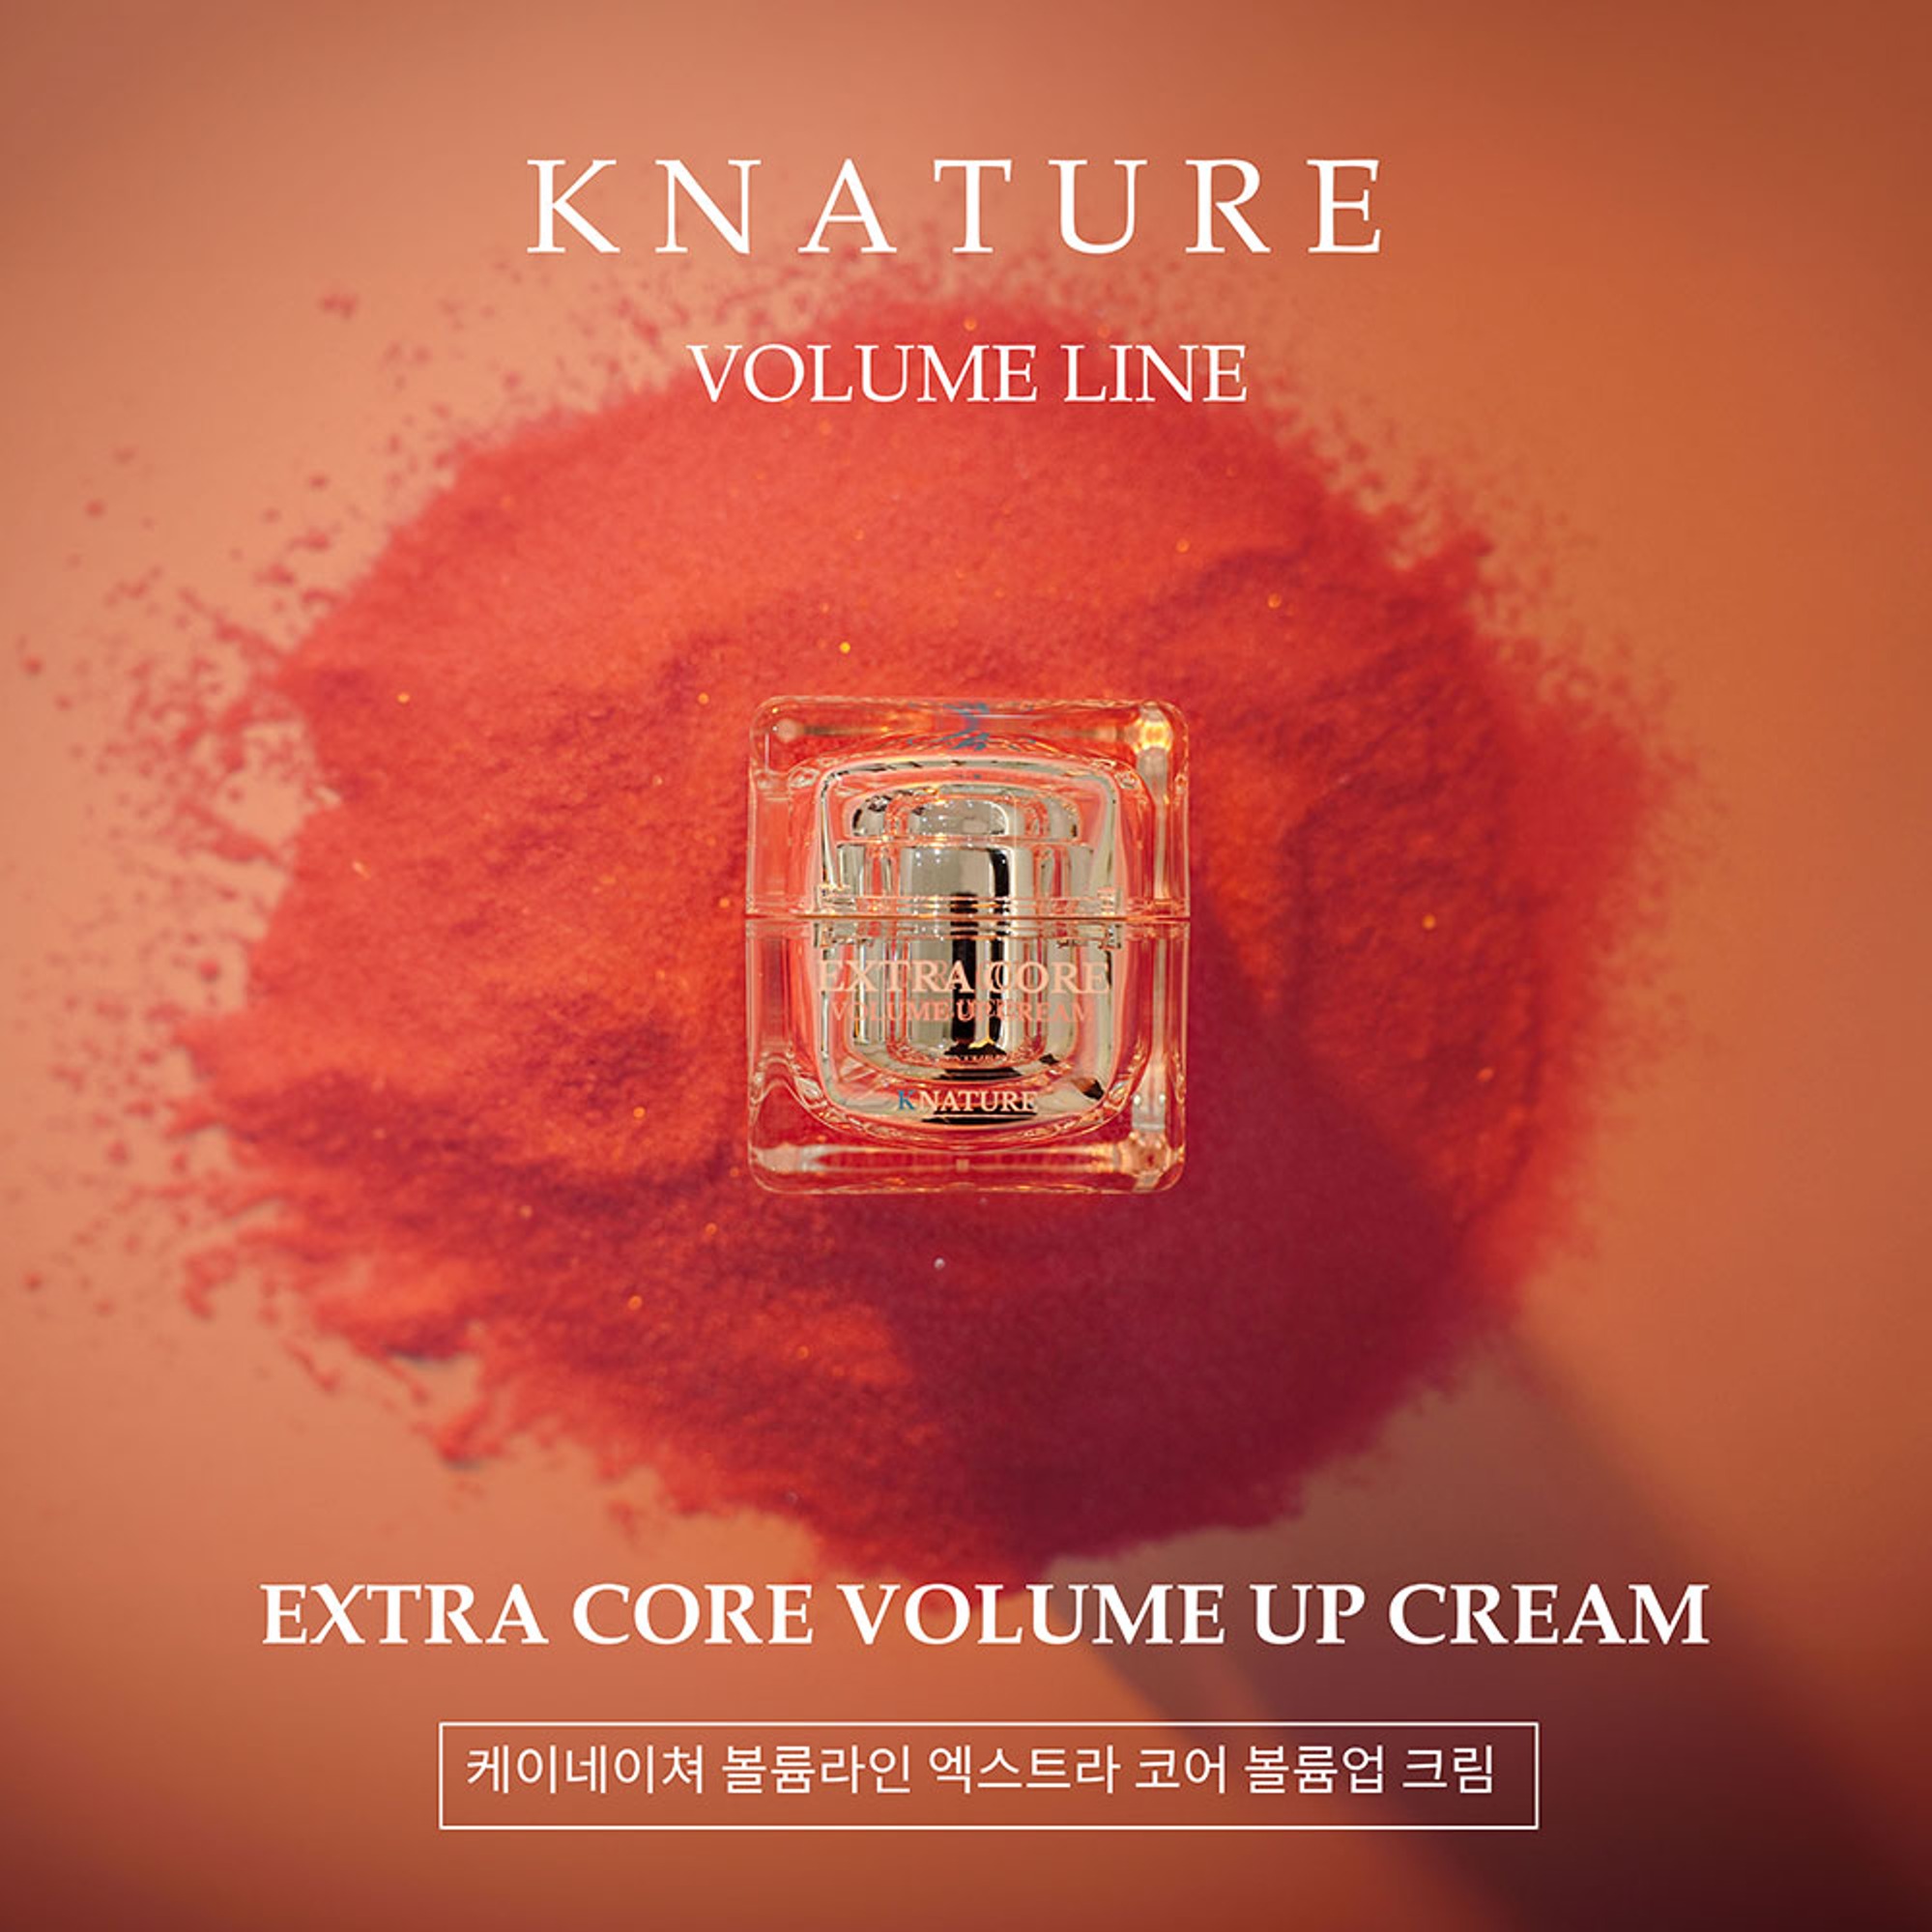 Extra Core Volume Up Cream